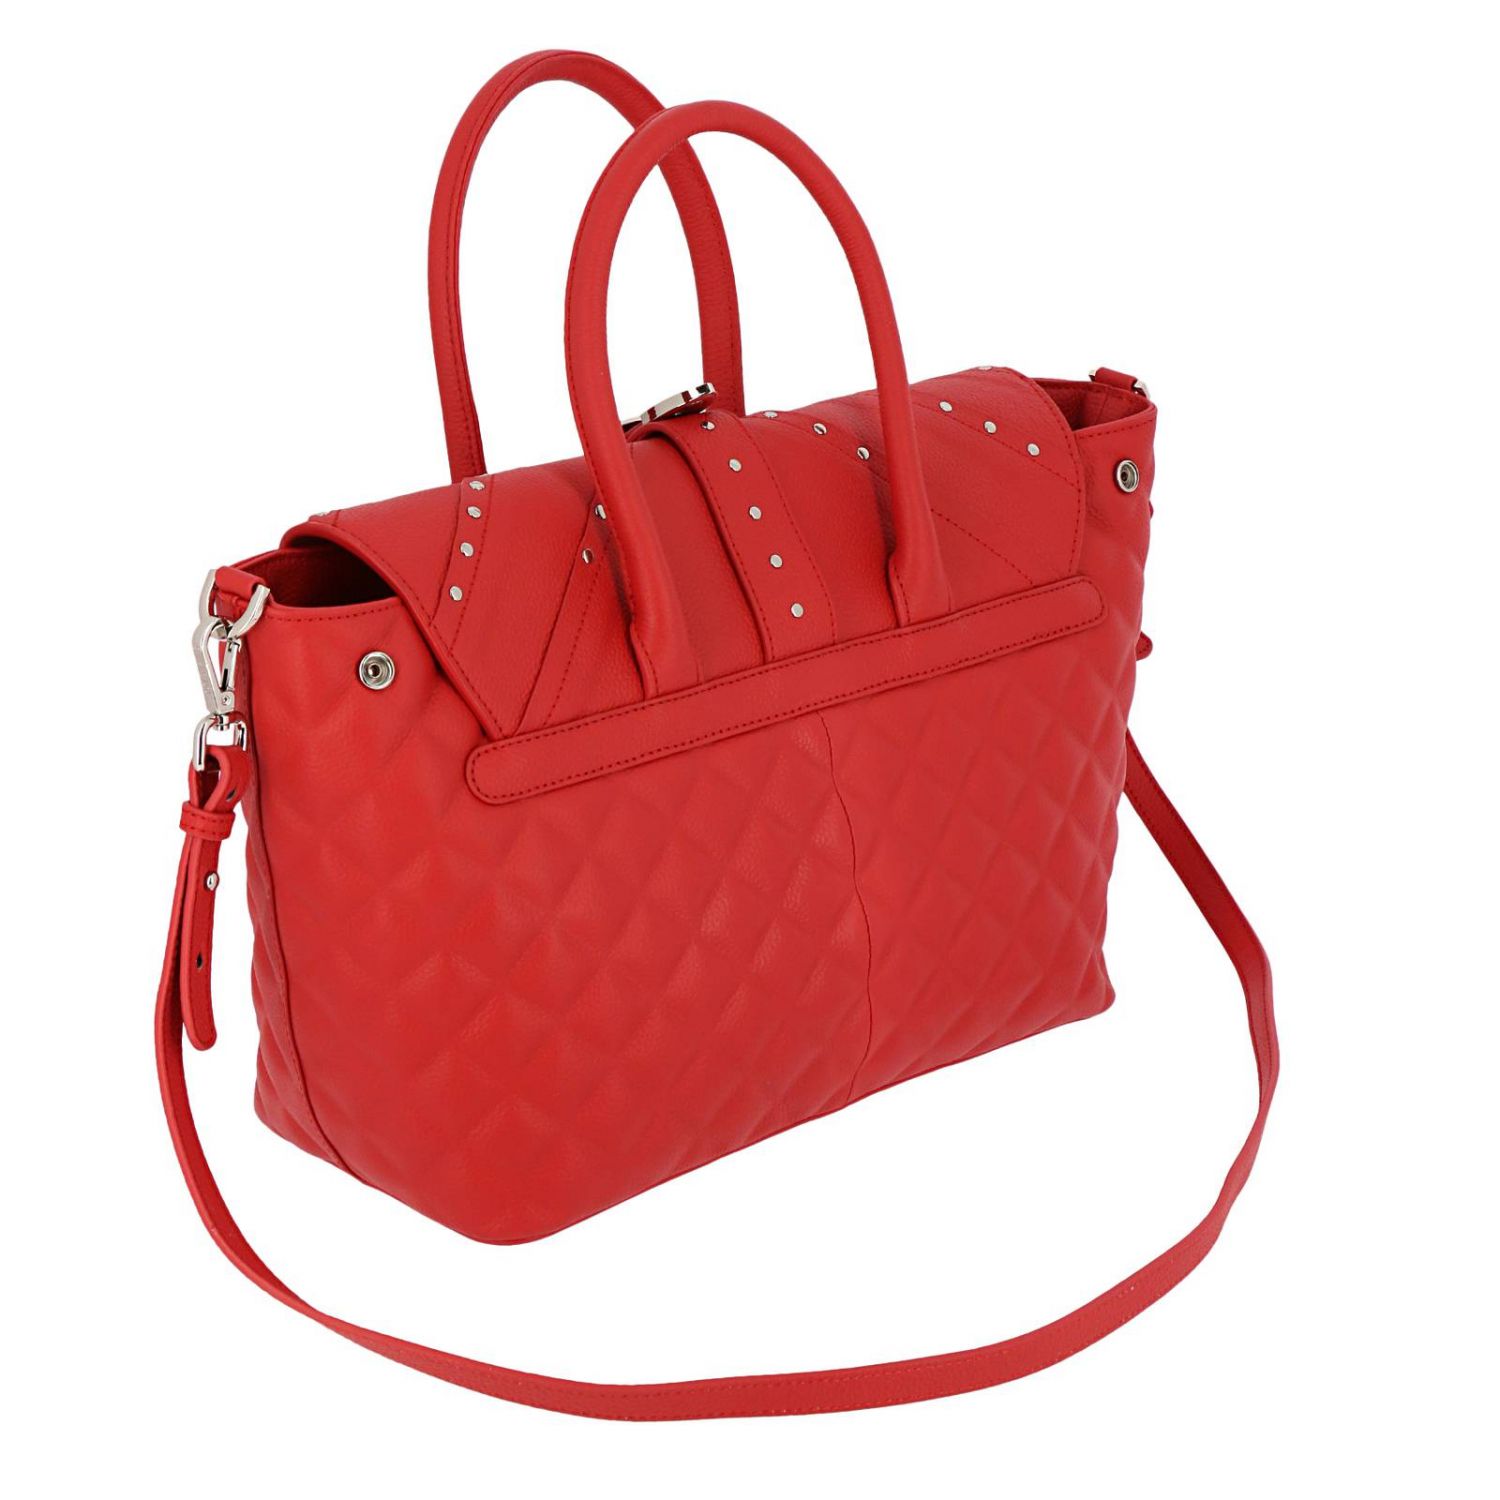 Mia Bag Outlet: Shoulder bag women | Handbag Mia Bag Women Red ...